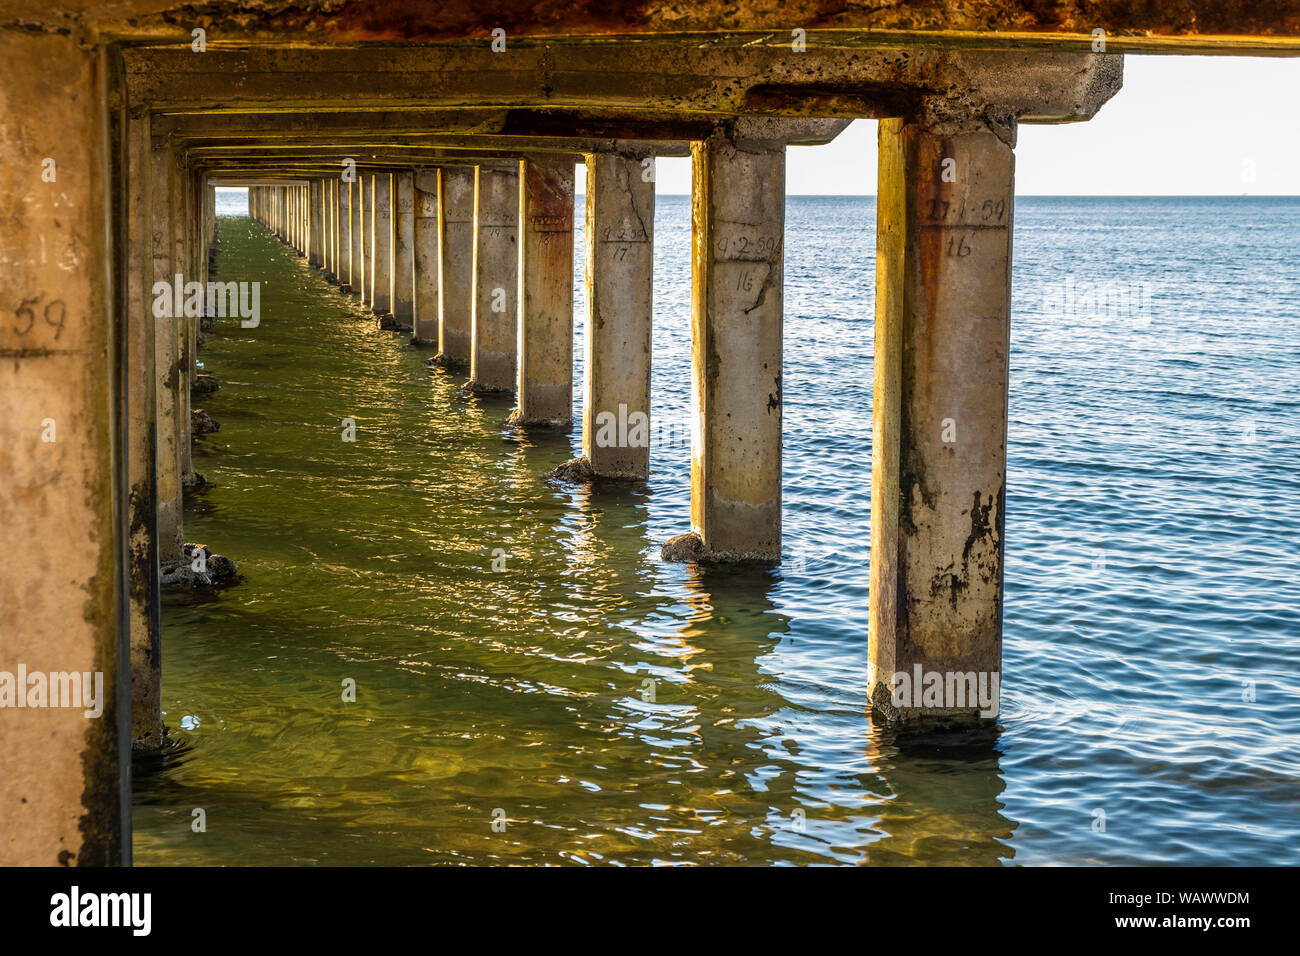 Diminishing perspective of wooden pillars underneath a pier on ocean coast Stock Photo